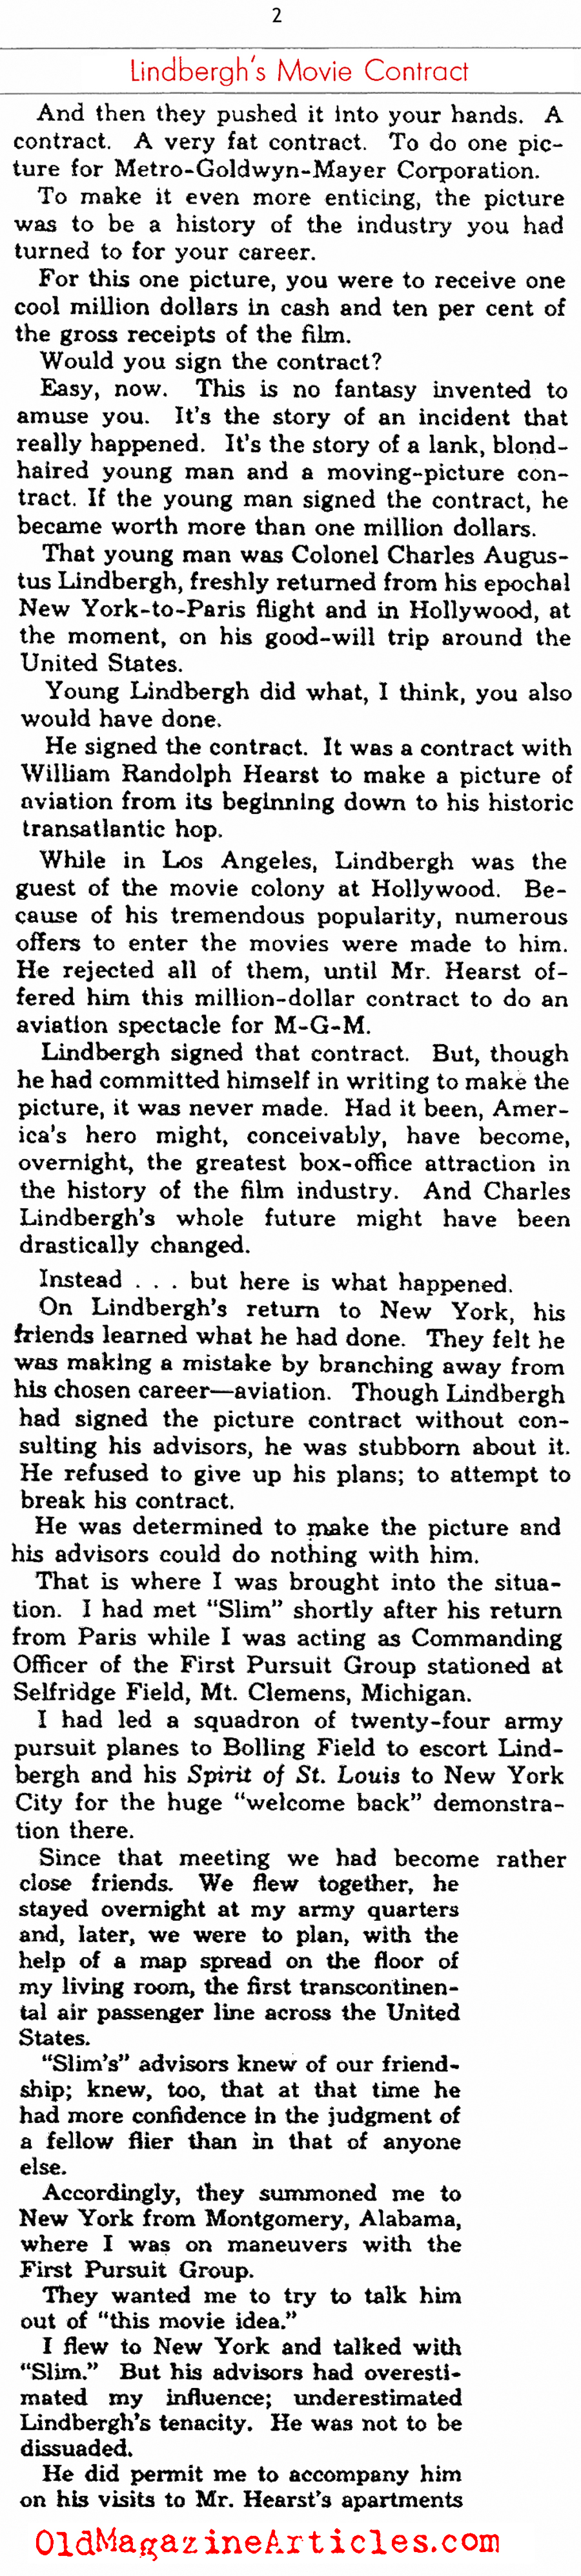 Lindbergh's Movie Contract (Photoplay Magazine, 1939)